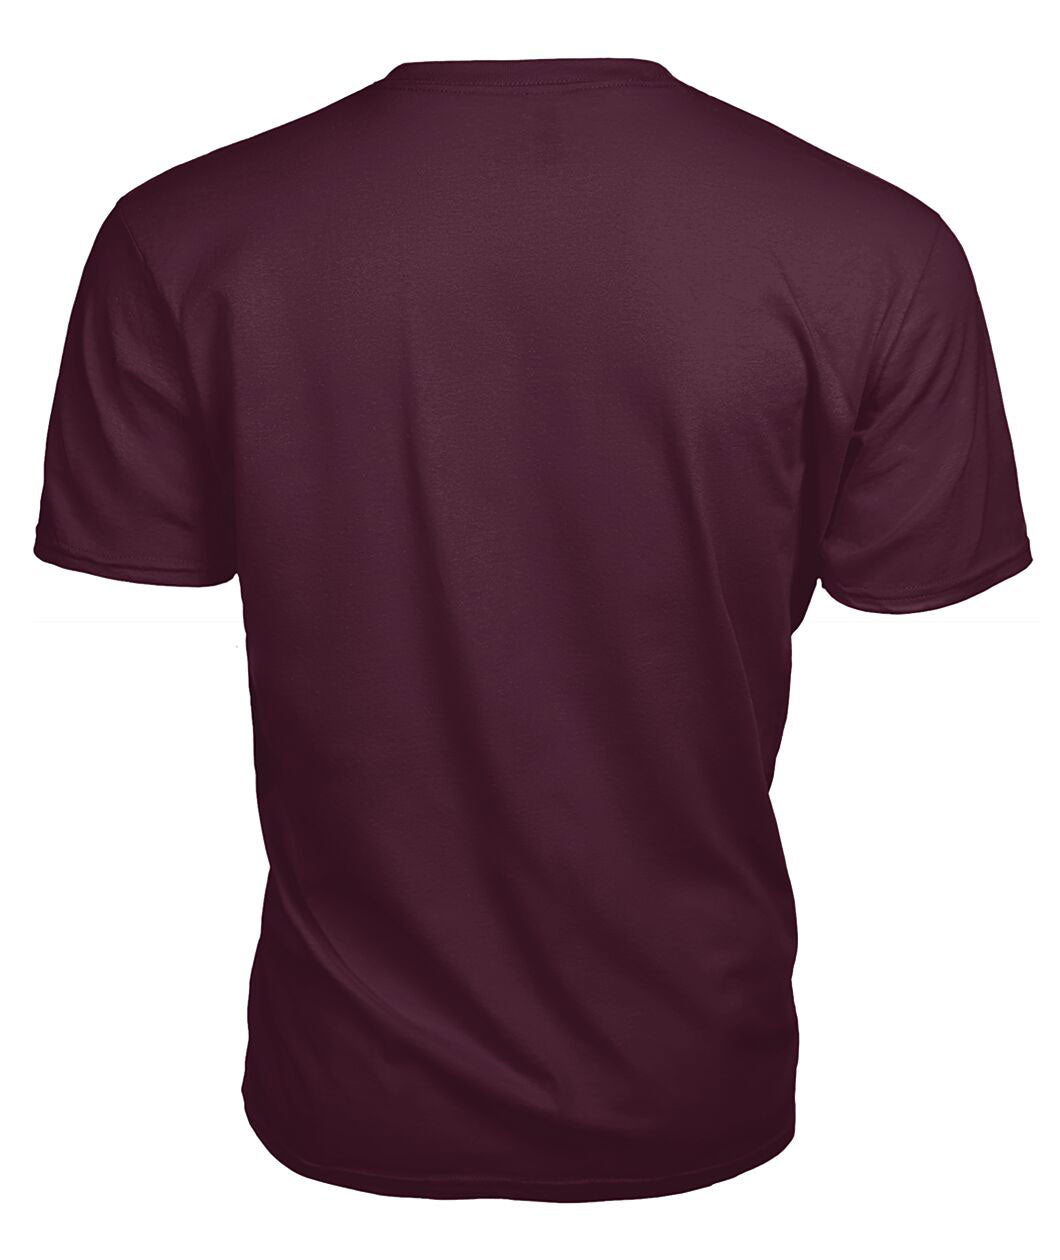 Haig Check Tartan Crest 2D T-shirt - Blood Runs Through My Veins Style